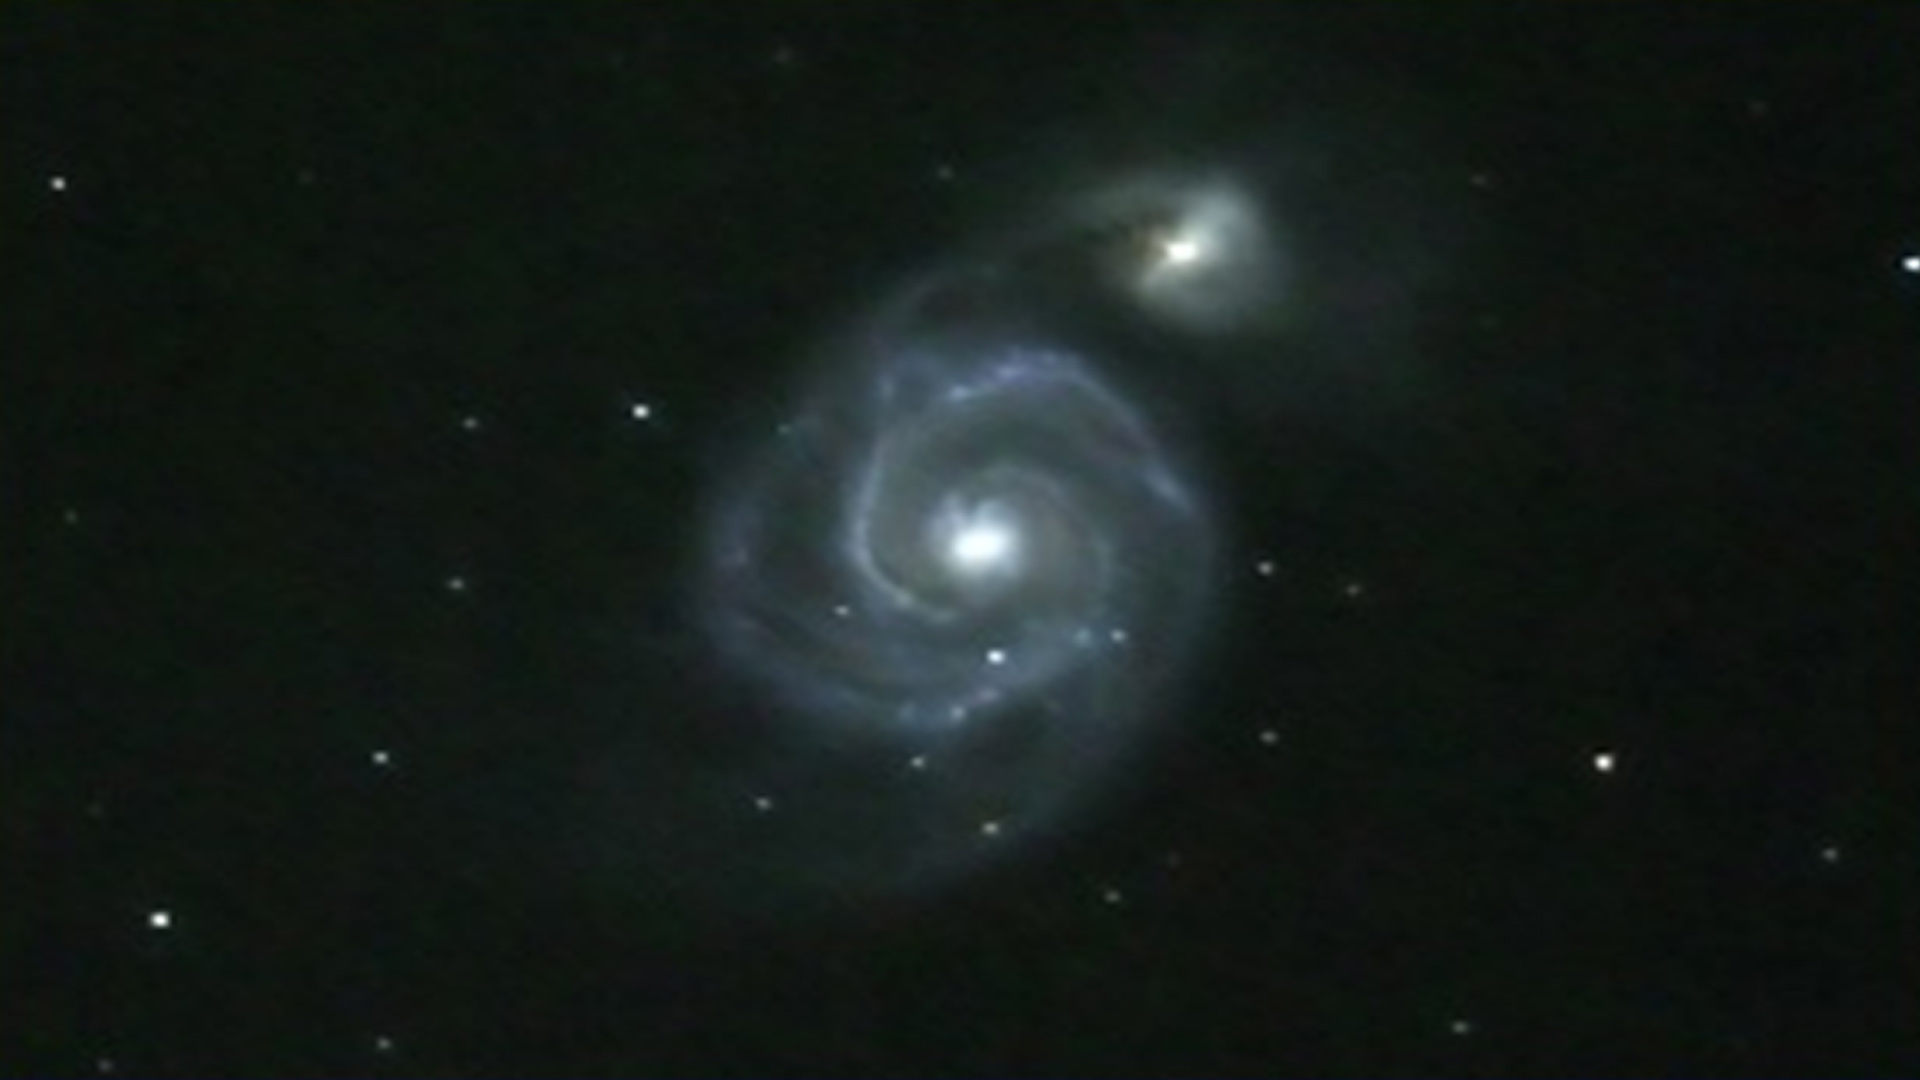 Inside the cosmic vortex: the Whirlpool Galaxy M51